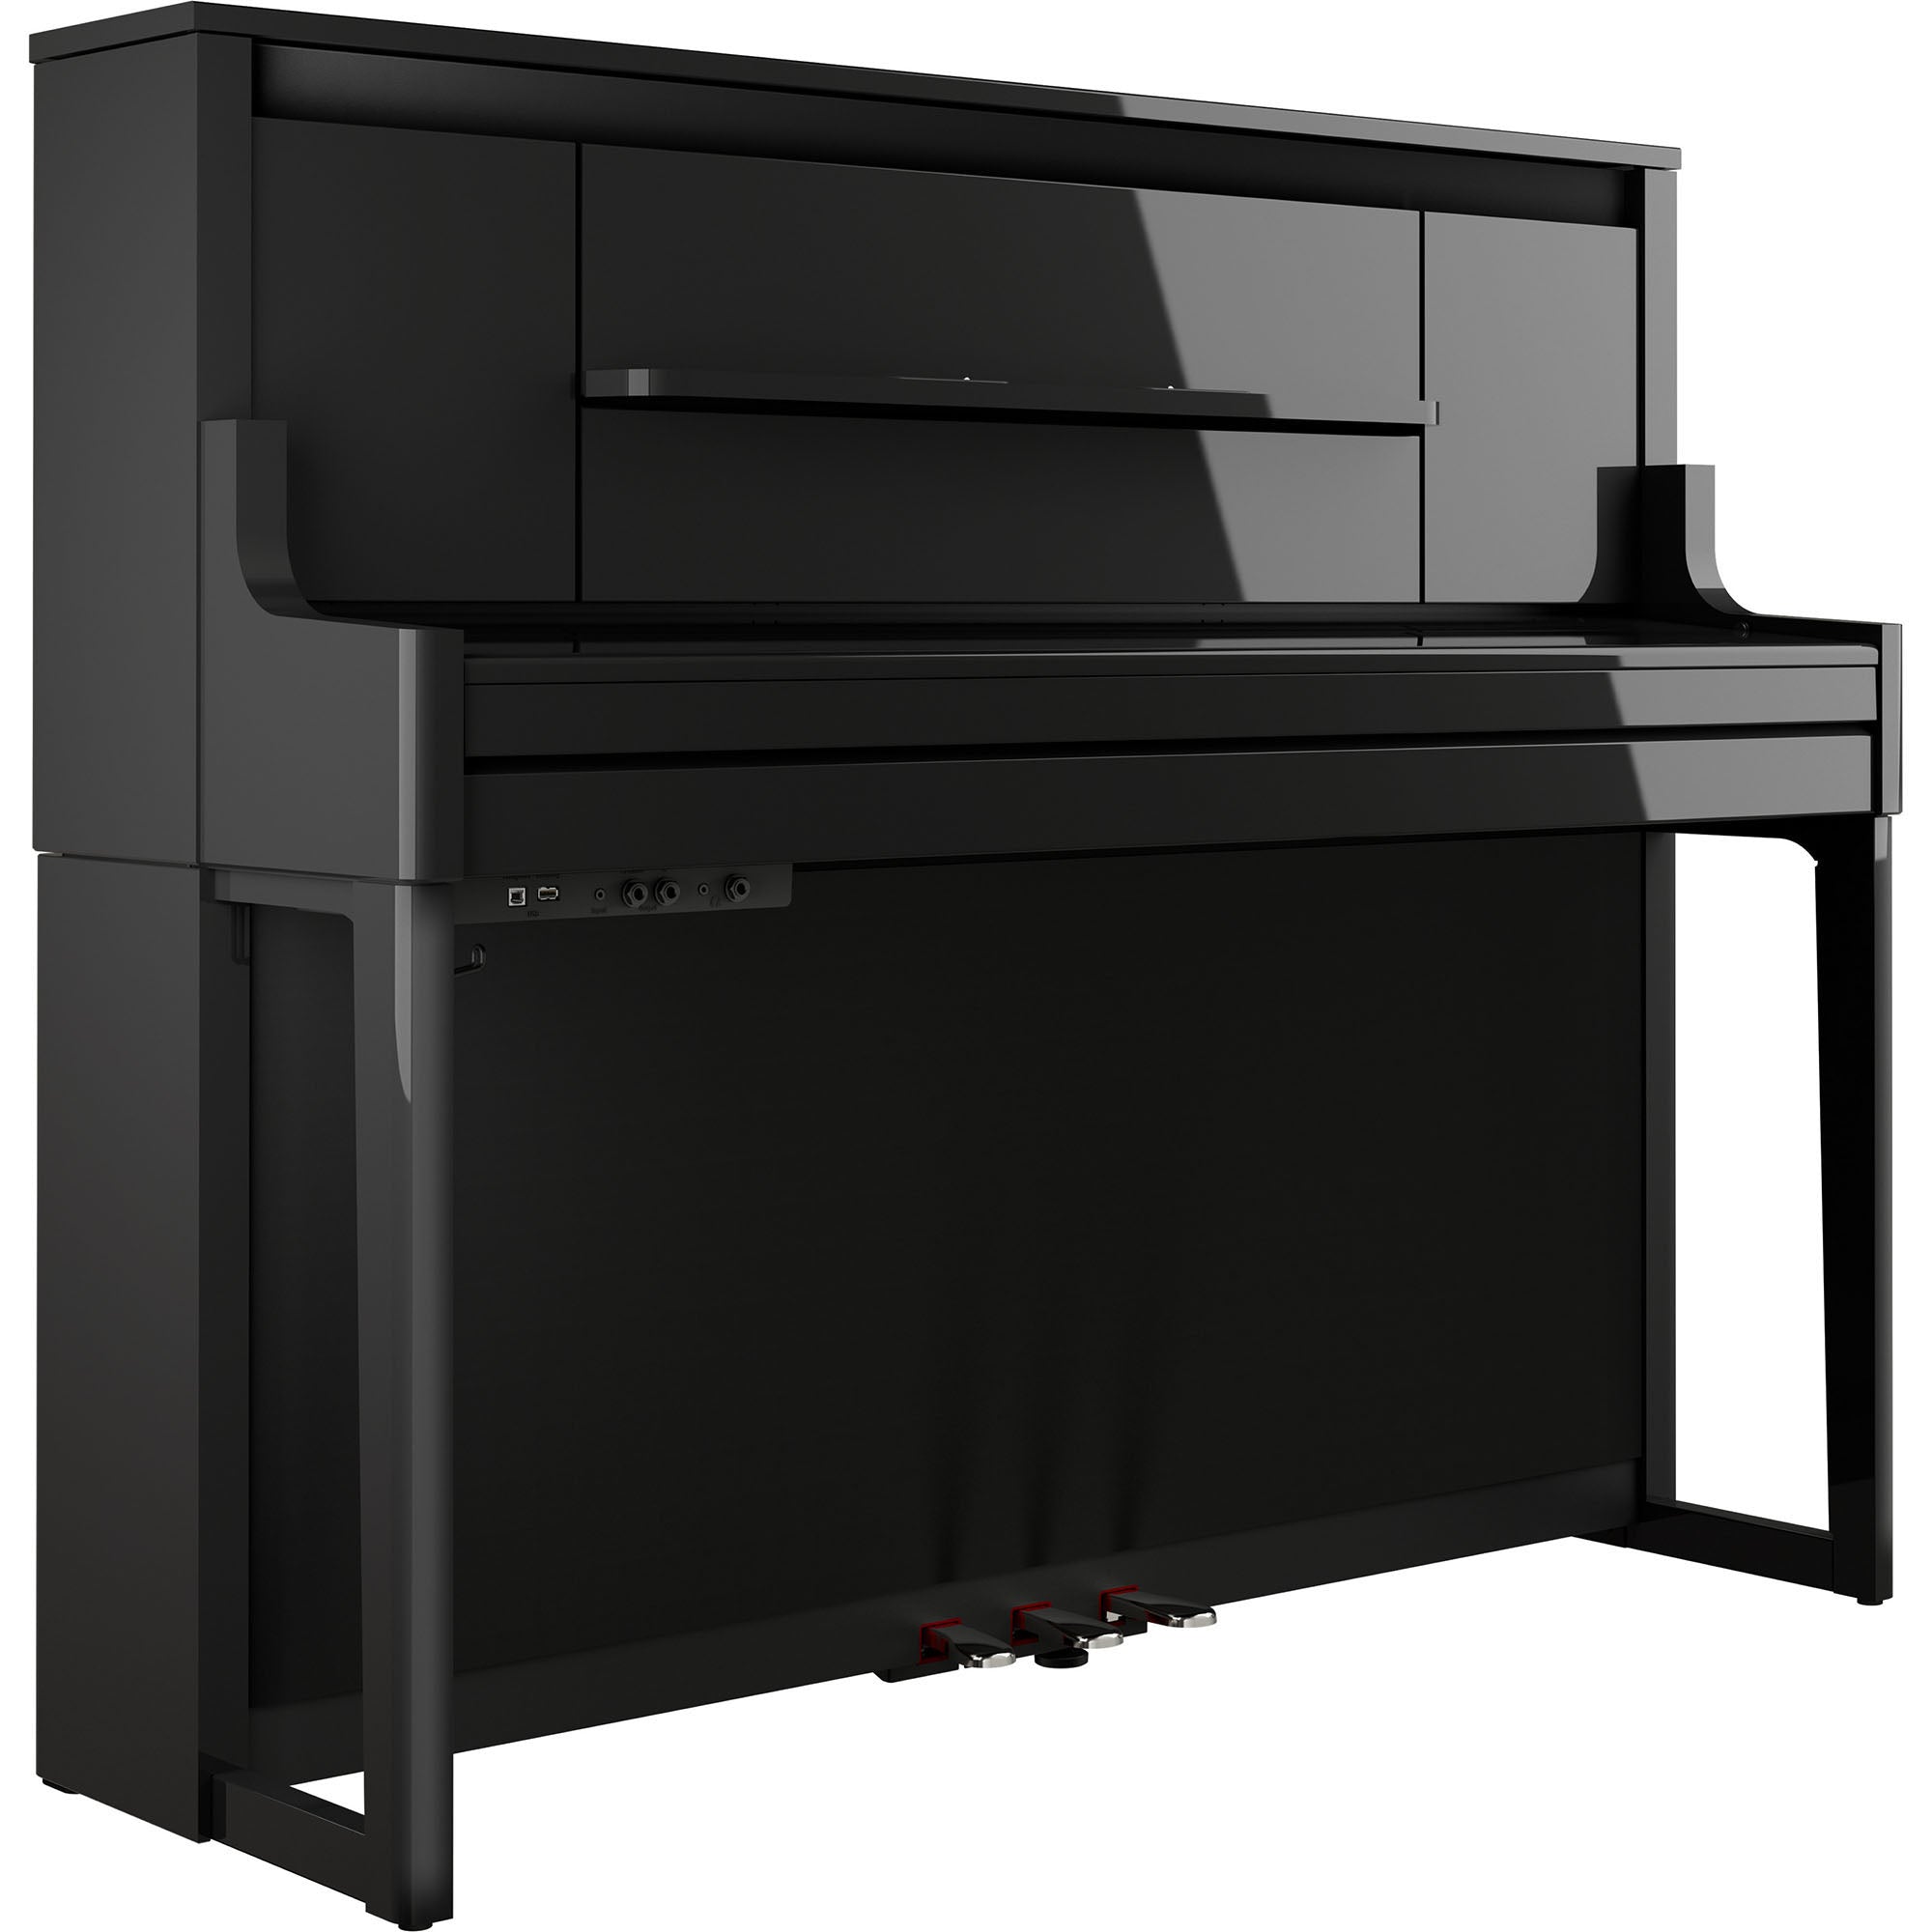 Roland LX-9 Digital Piano with Bench - Polished Ebony, View 5